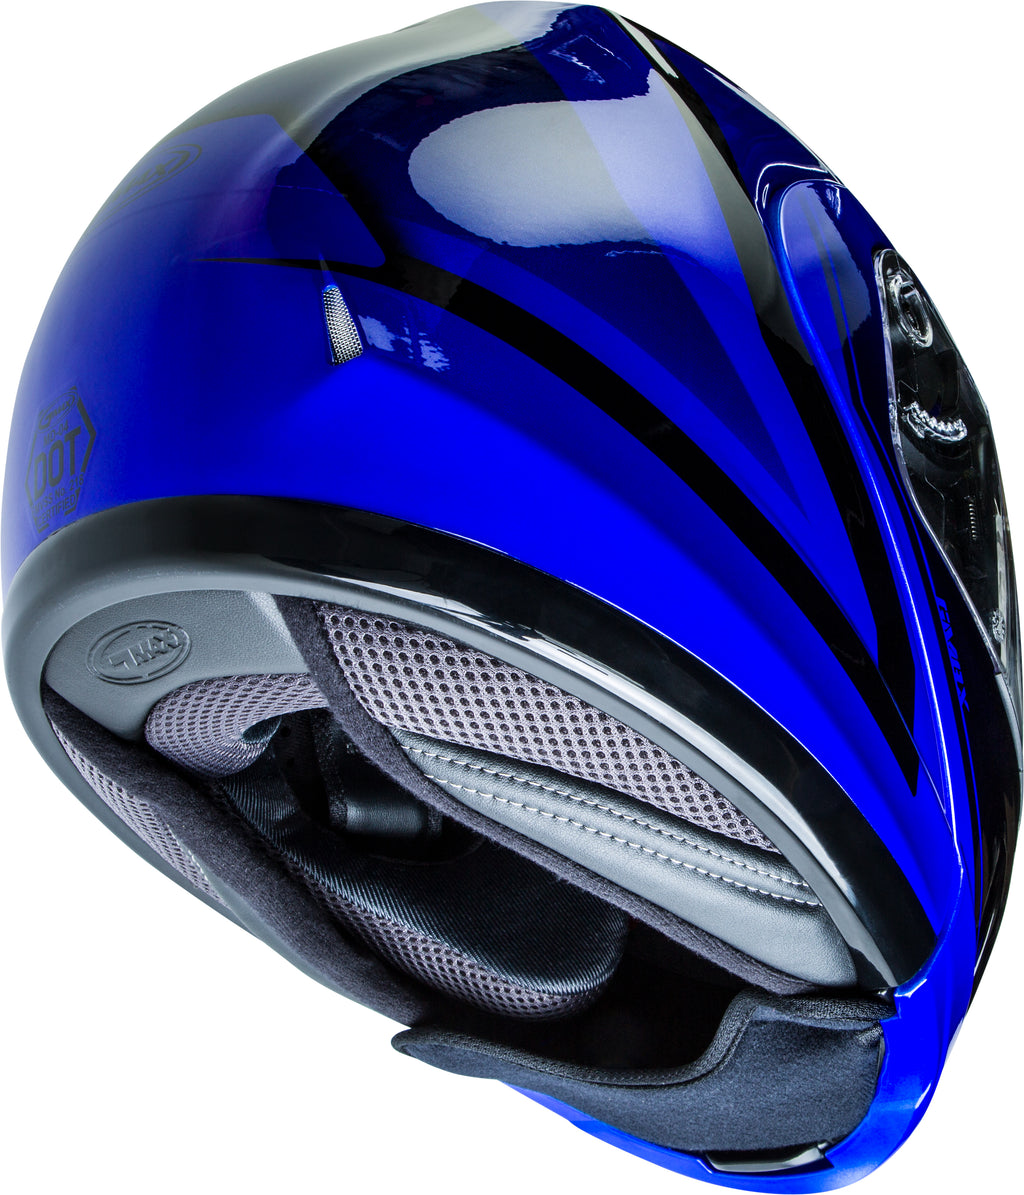 Md 04s Modular Docket Snow Helmet Blue/Black Xs